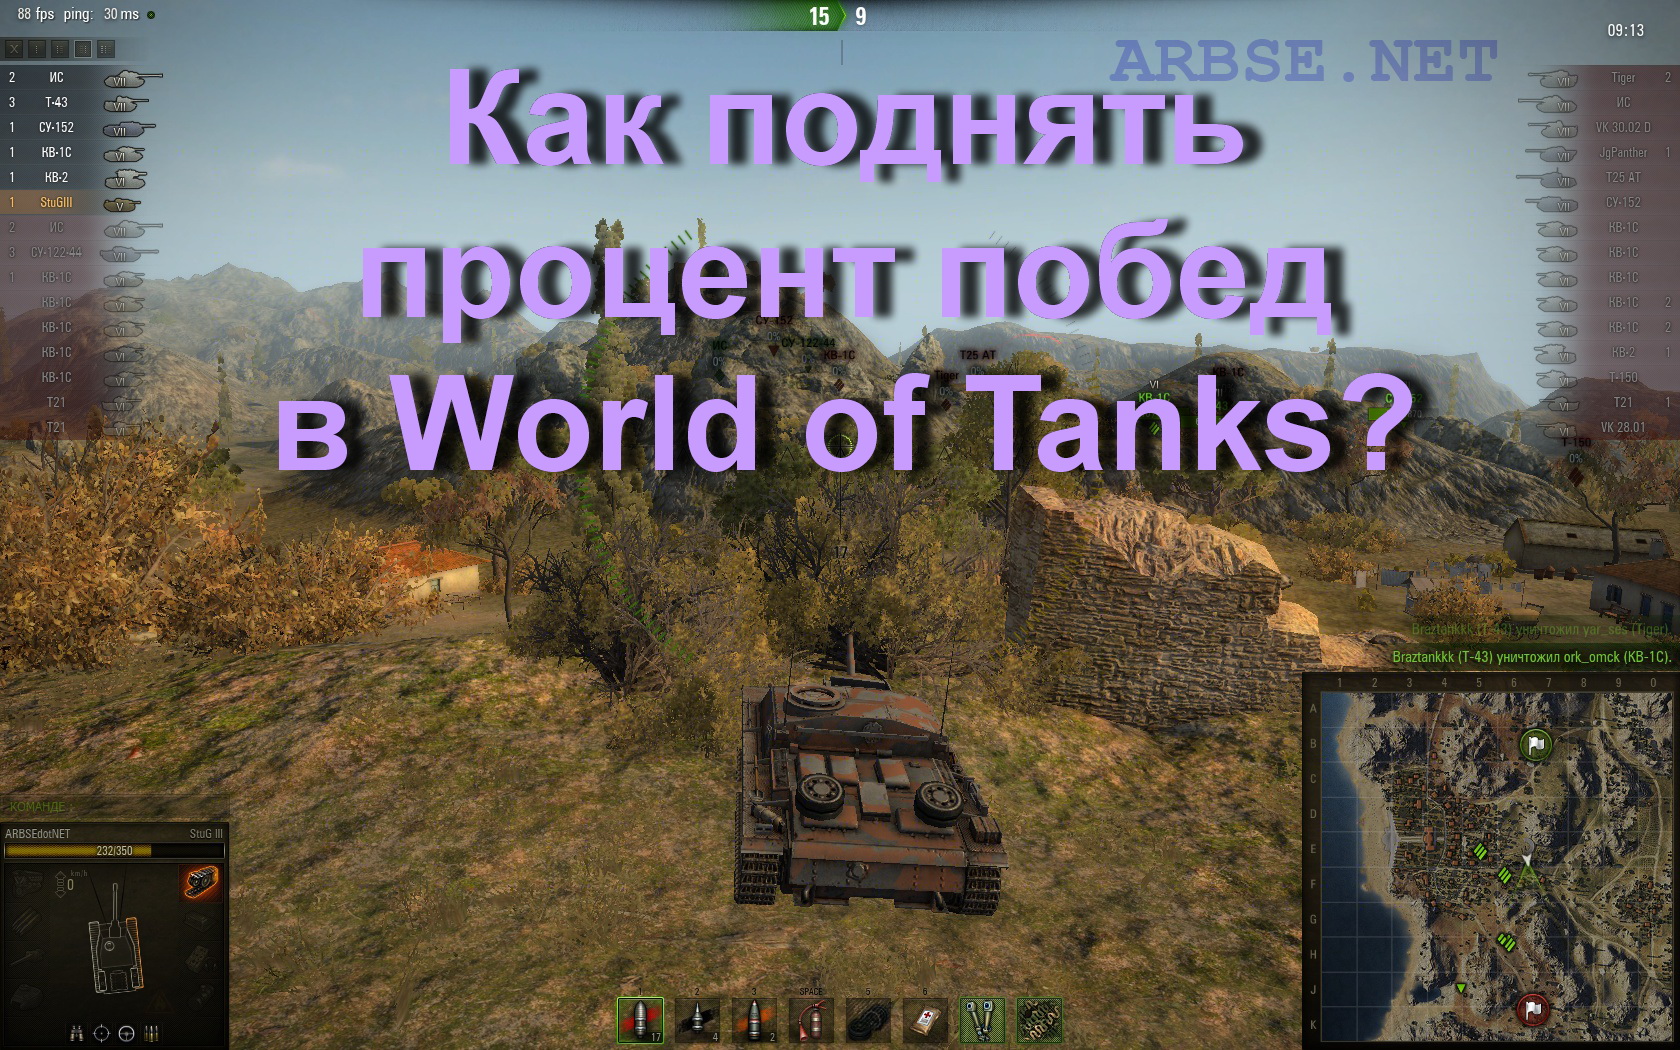 World of tanks проценты. Процент побед в World of Tanks. Поднятие % побед мир танков. Как поднять процент побед в WOT. Как поднять процент побед в World of Tanks быстро.